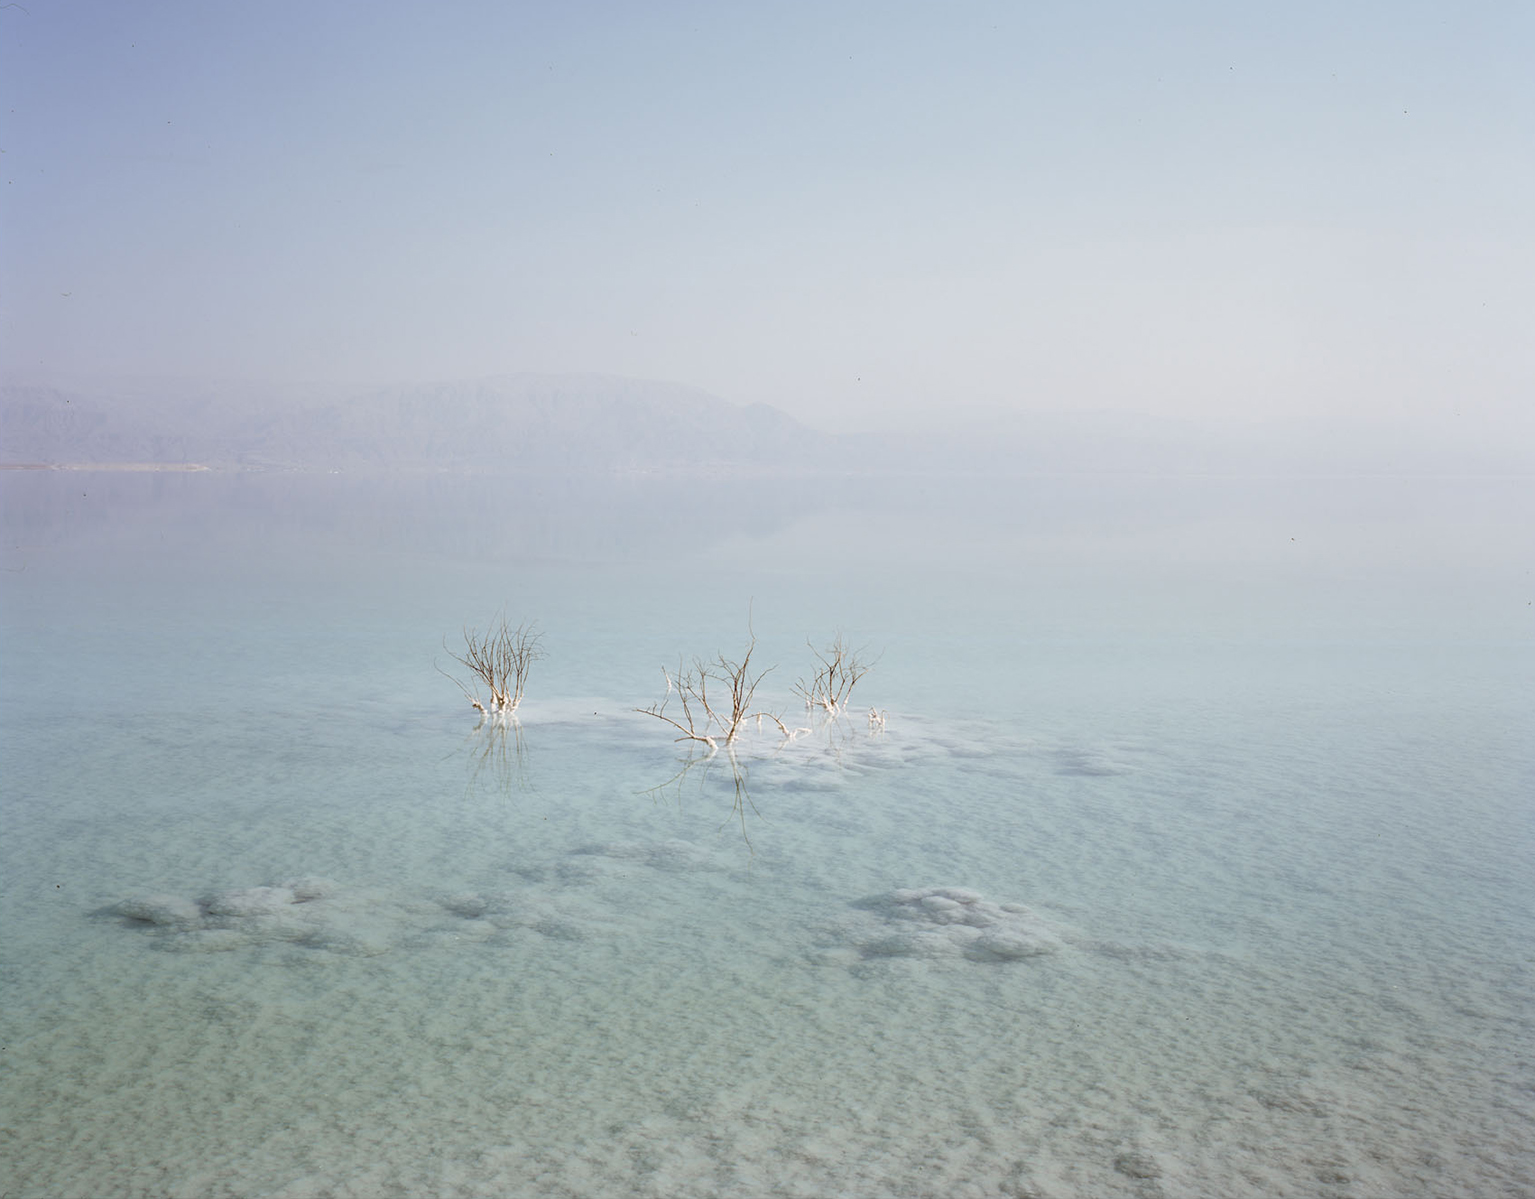 "Dead Sea" by Paris Petridis